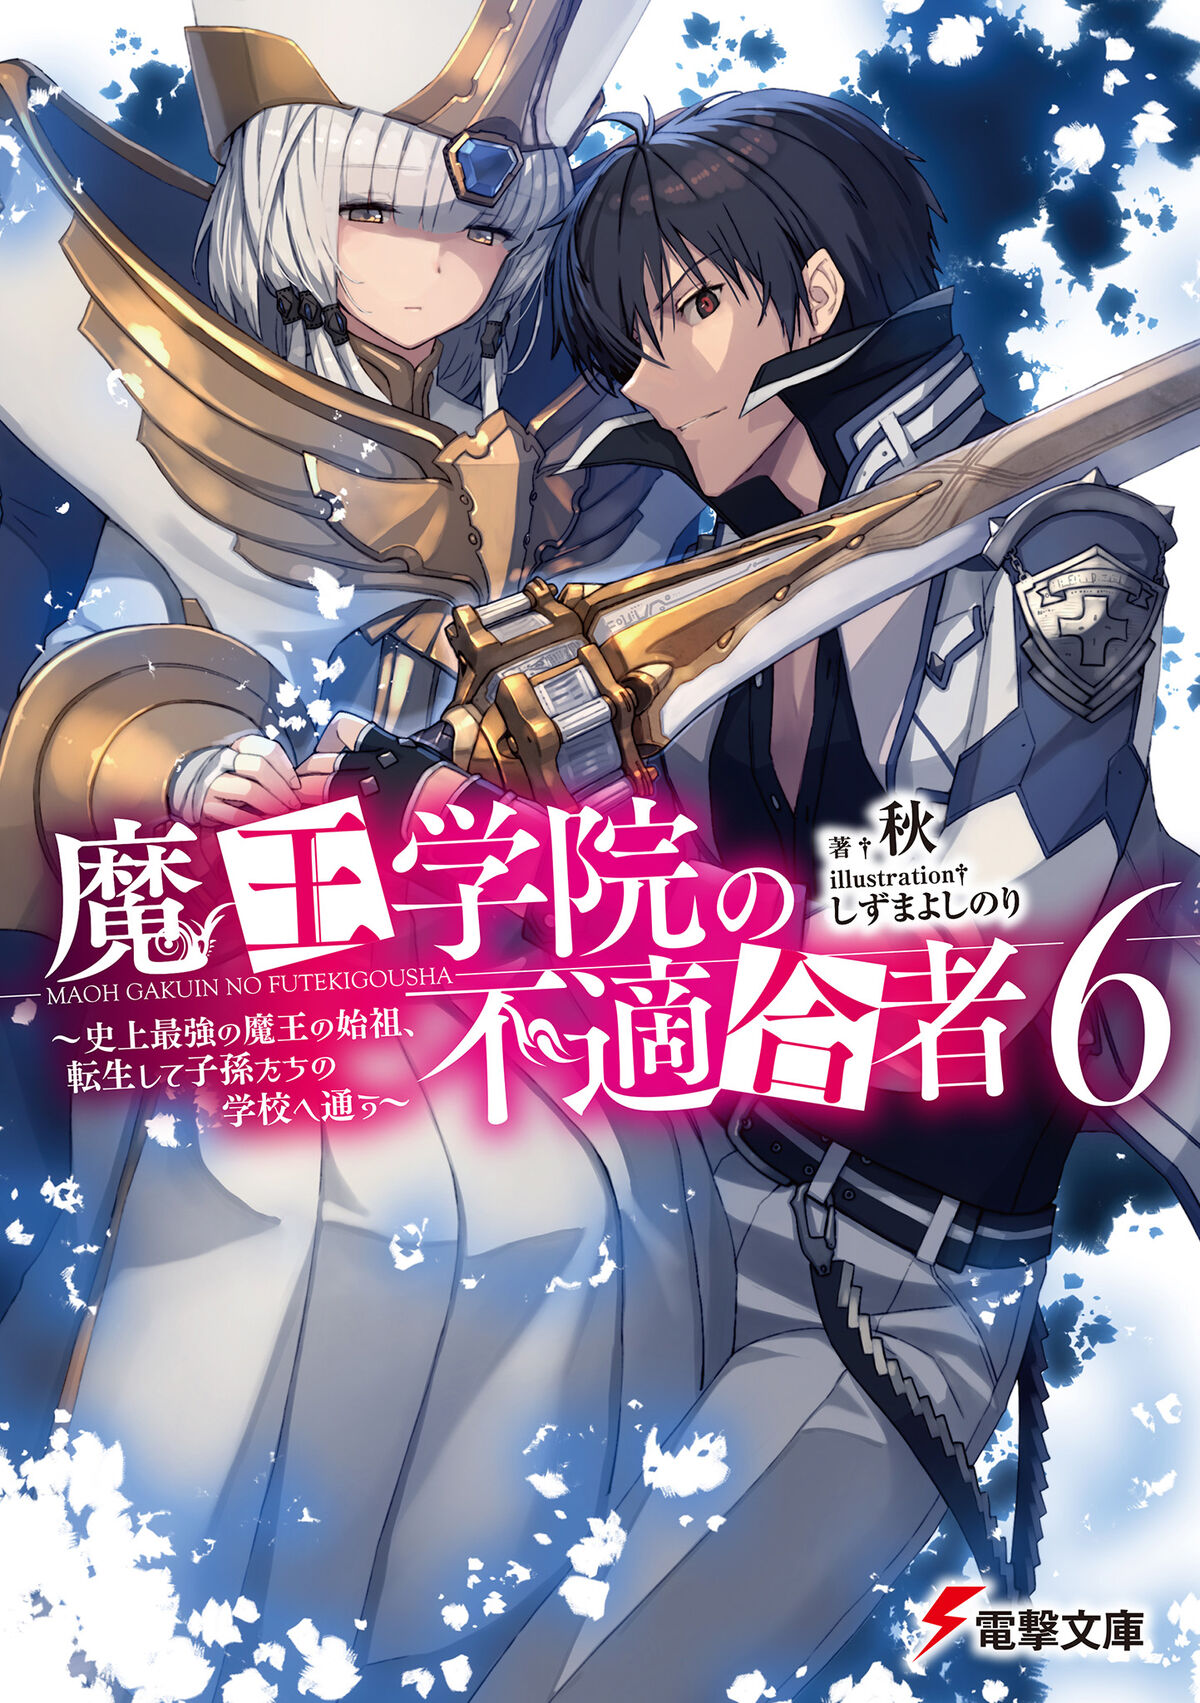 Light Novel Volume 13 Act 1, Maou Gakuin Wiki